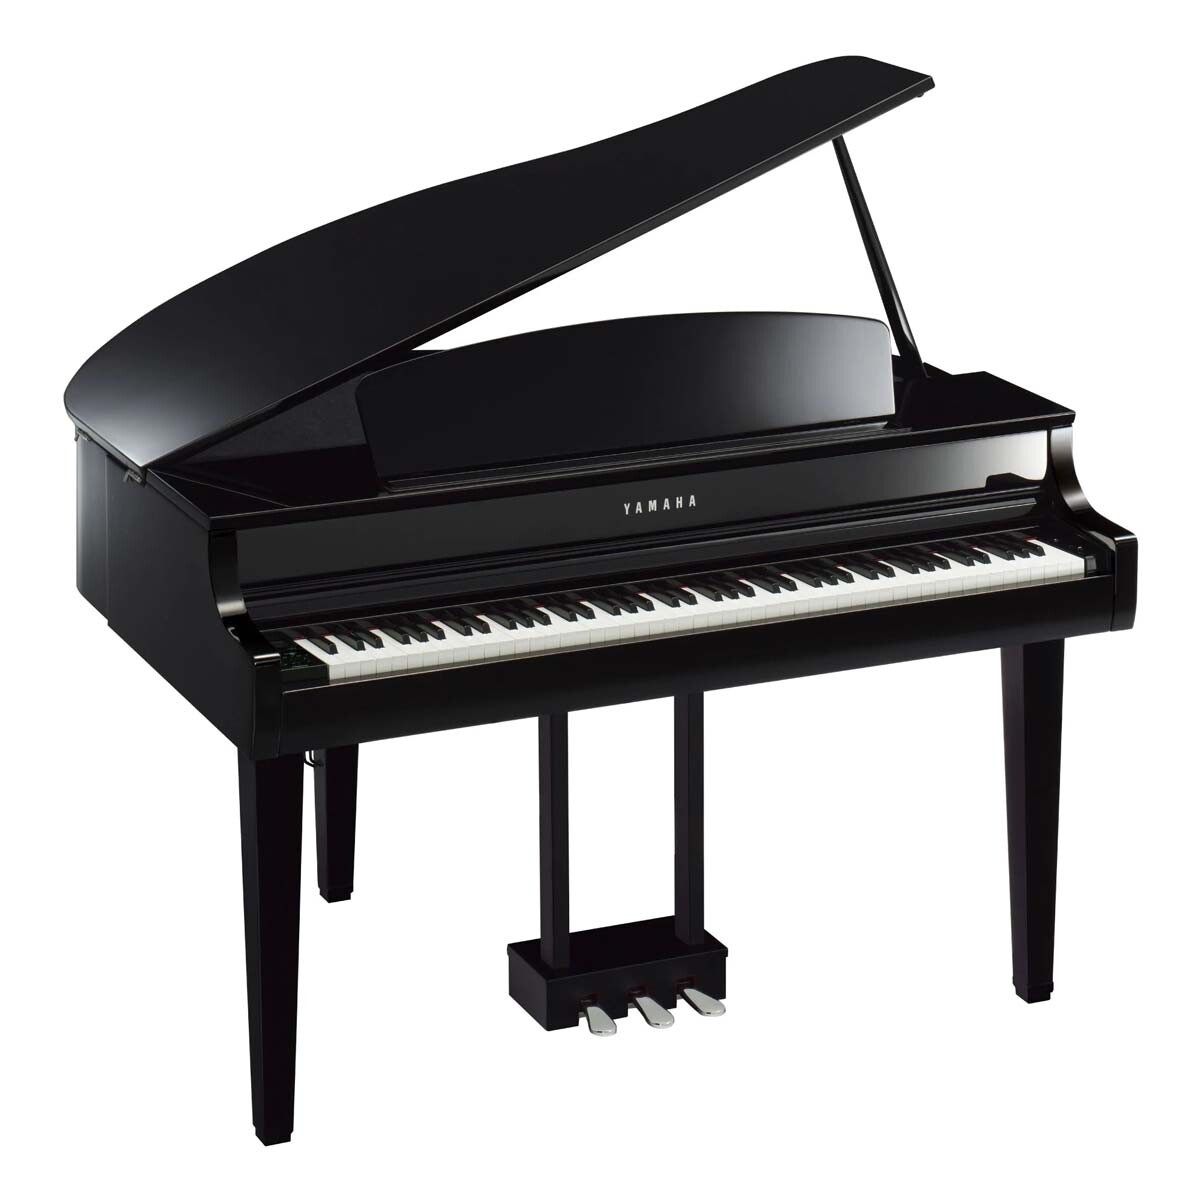 Piano Digital Yamaha Clp765gp 